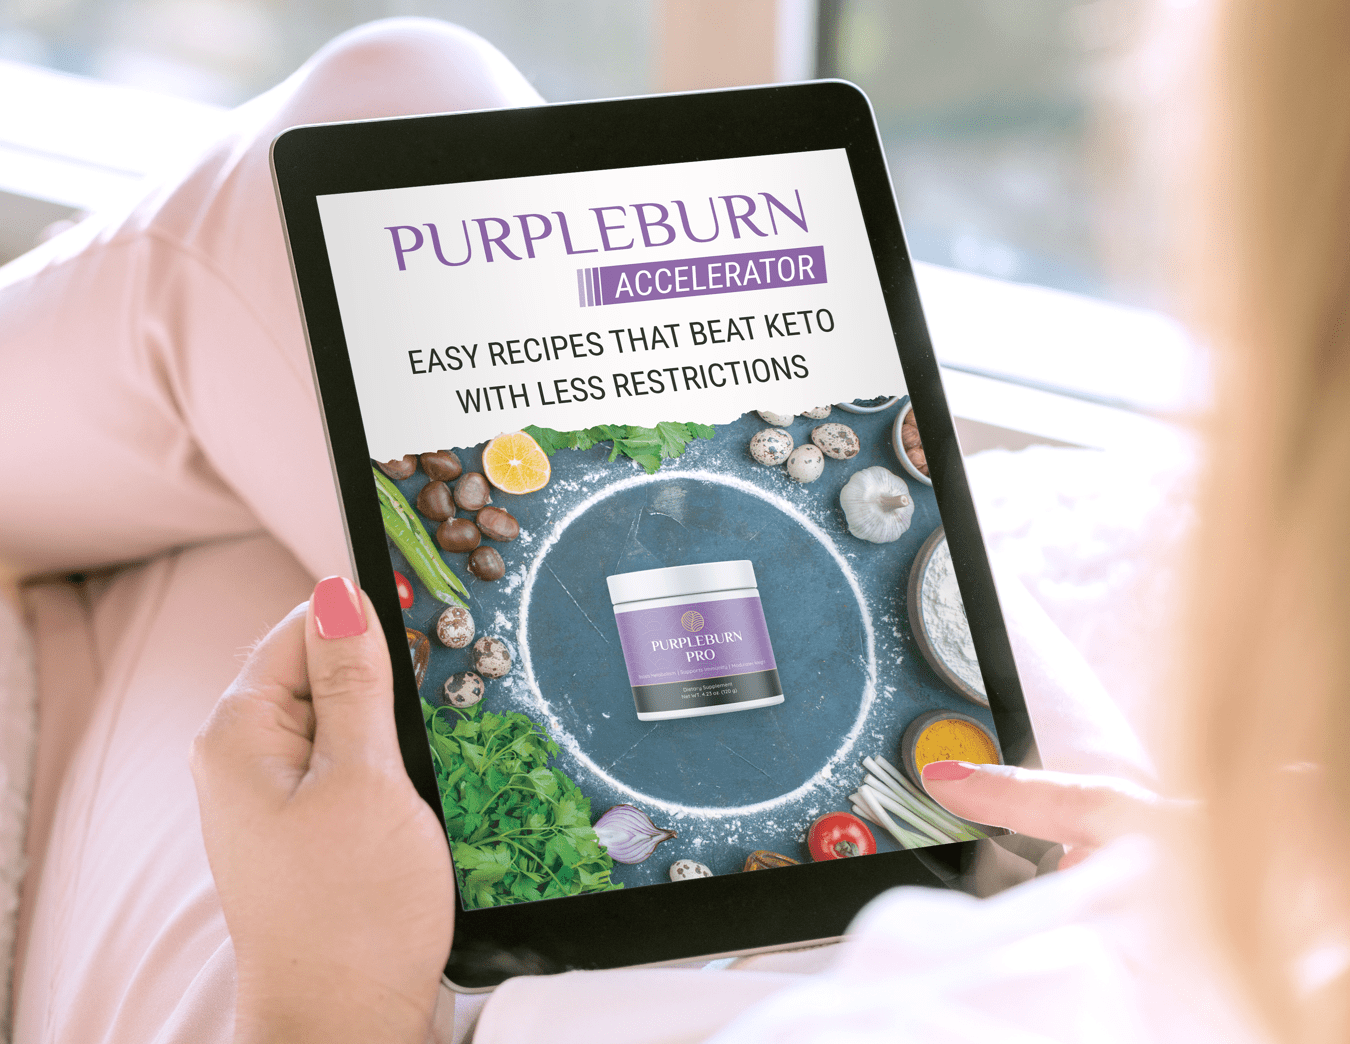 Burner Fat Supplement For Weight Loss - PurpleBurn Pro